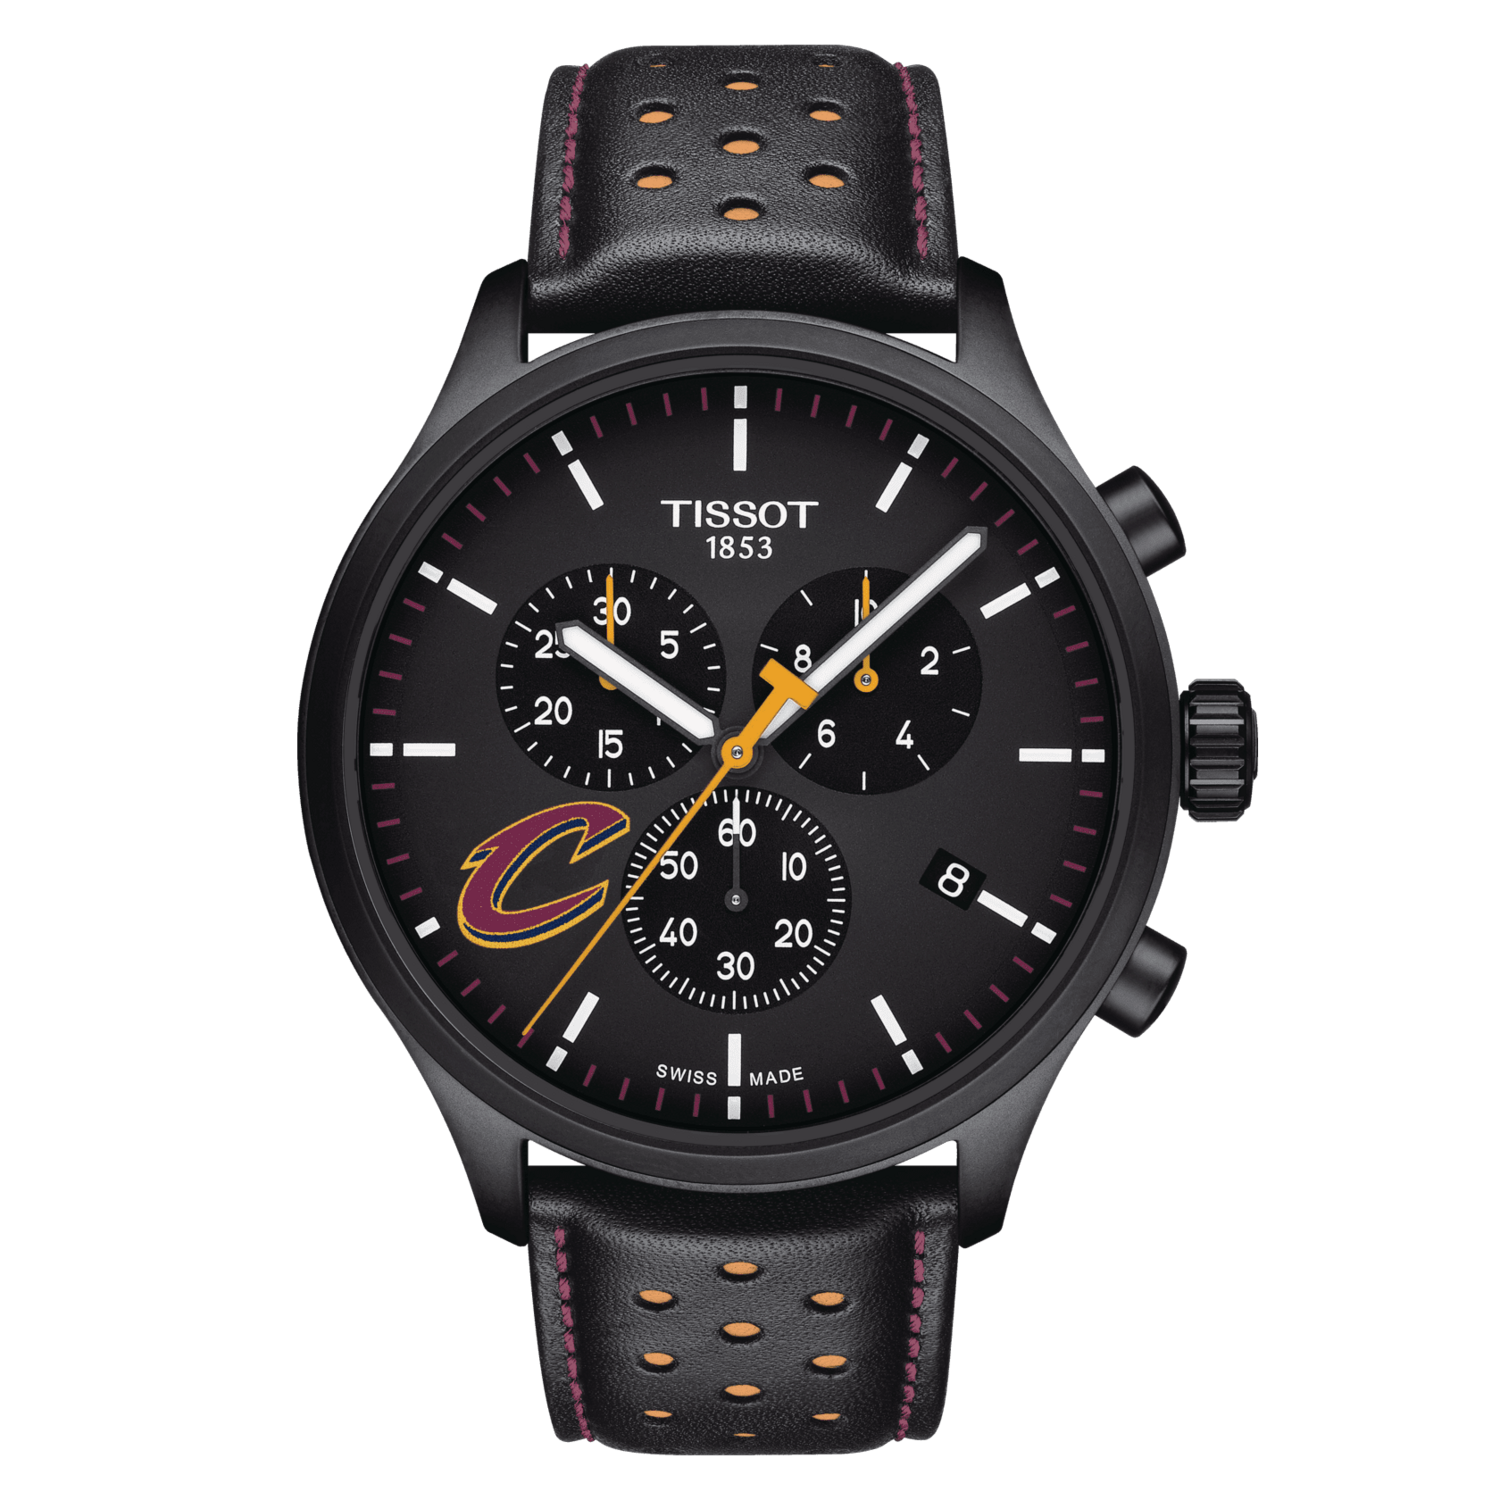 Часы Tissot Chrono XL NBA Teams T116.617.36.051.01